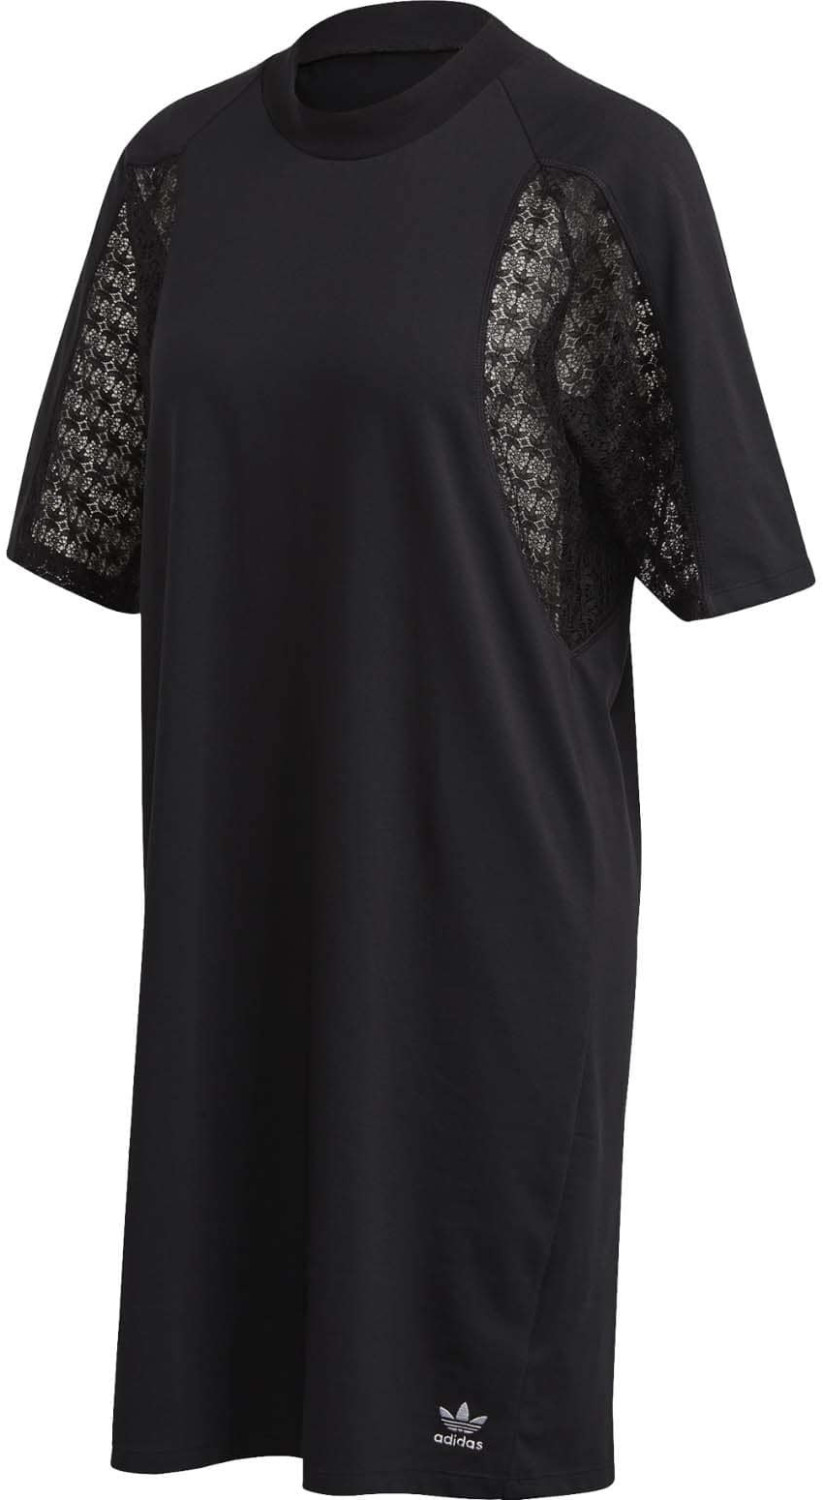 Adidas Lace T-Shirt Dress black